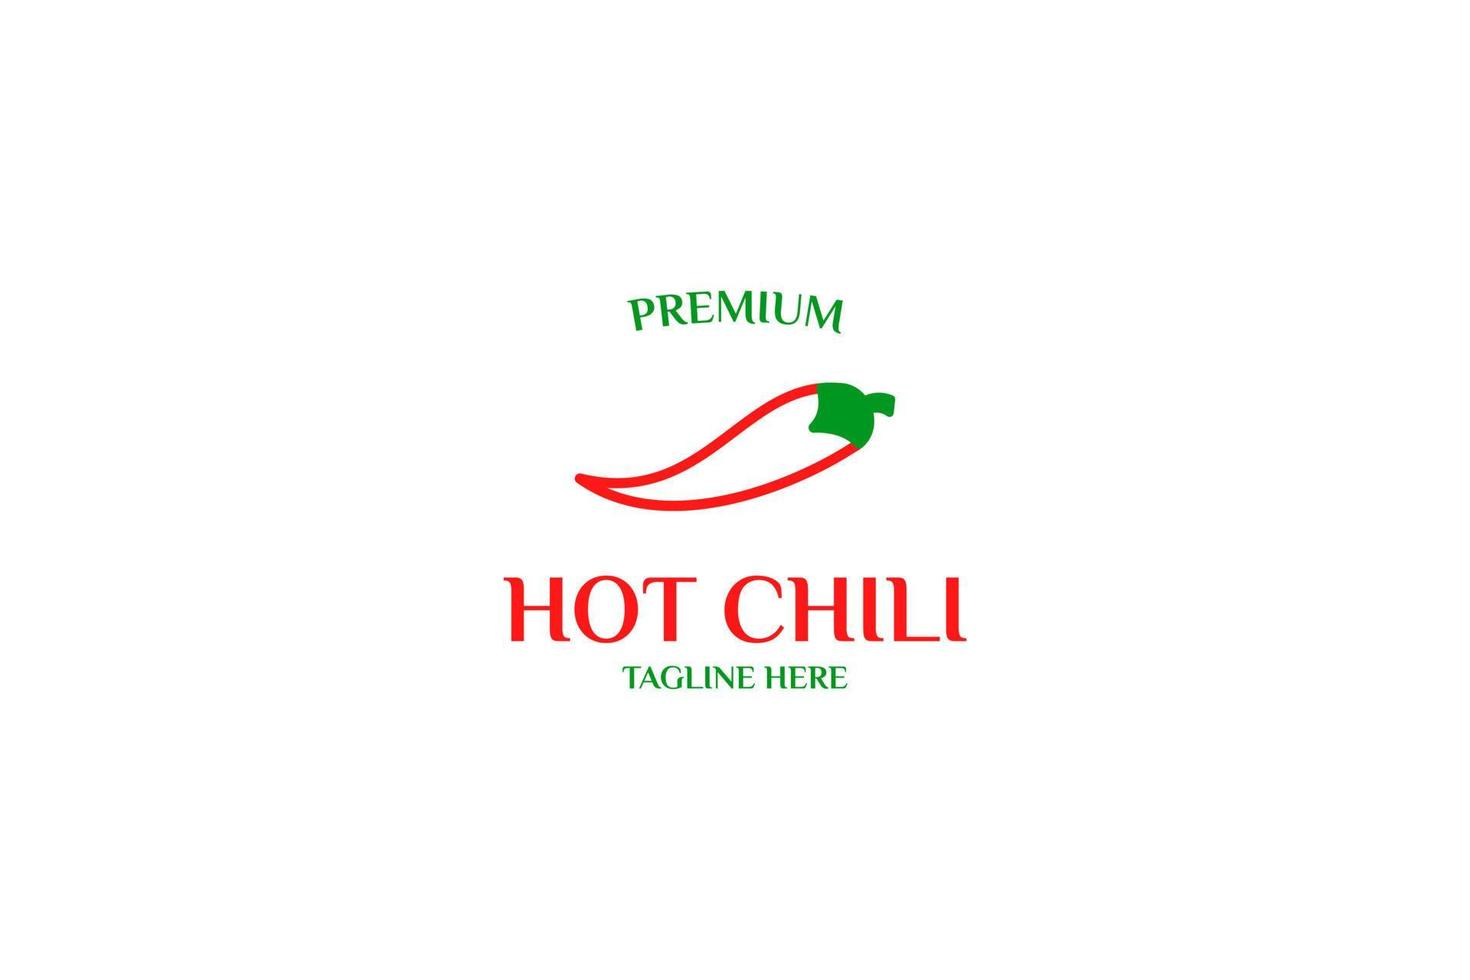 Flat pepper chili logo design vector illustration